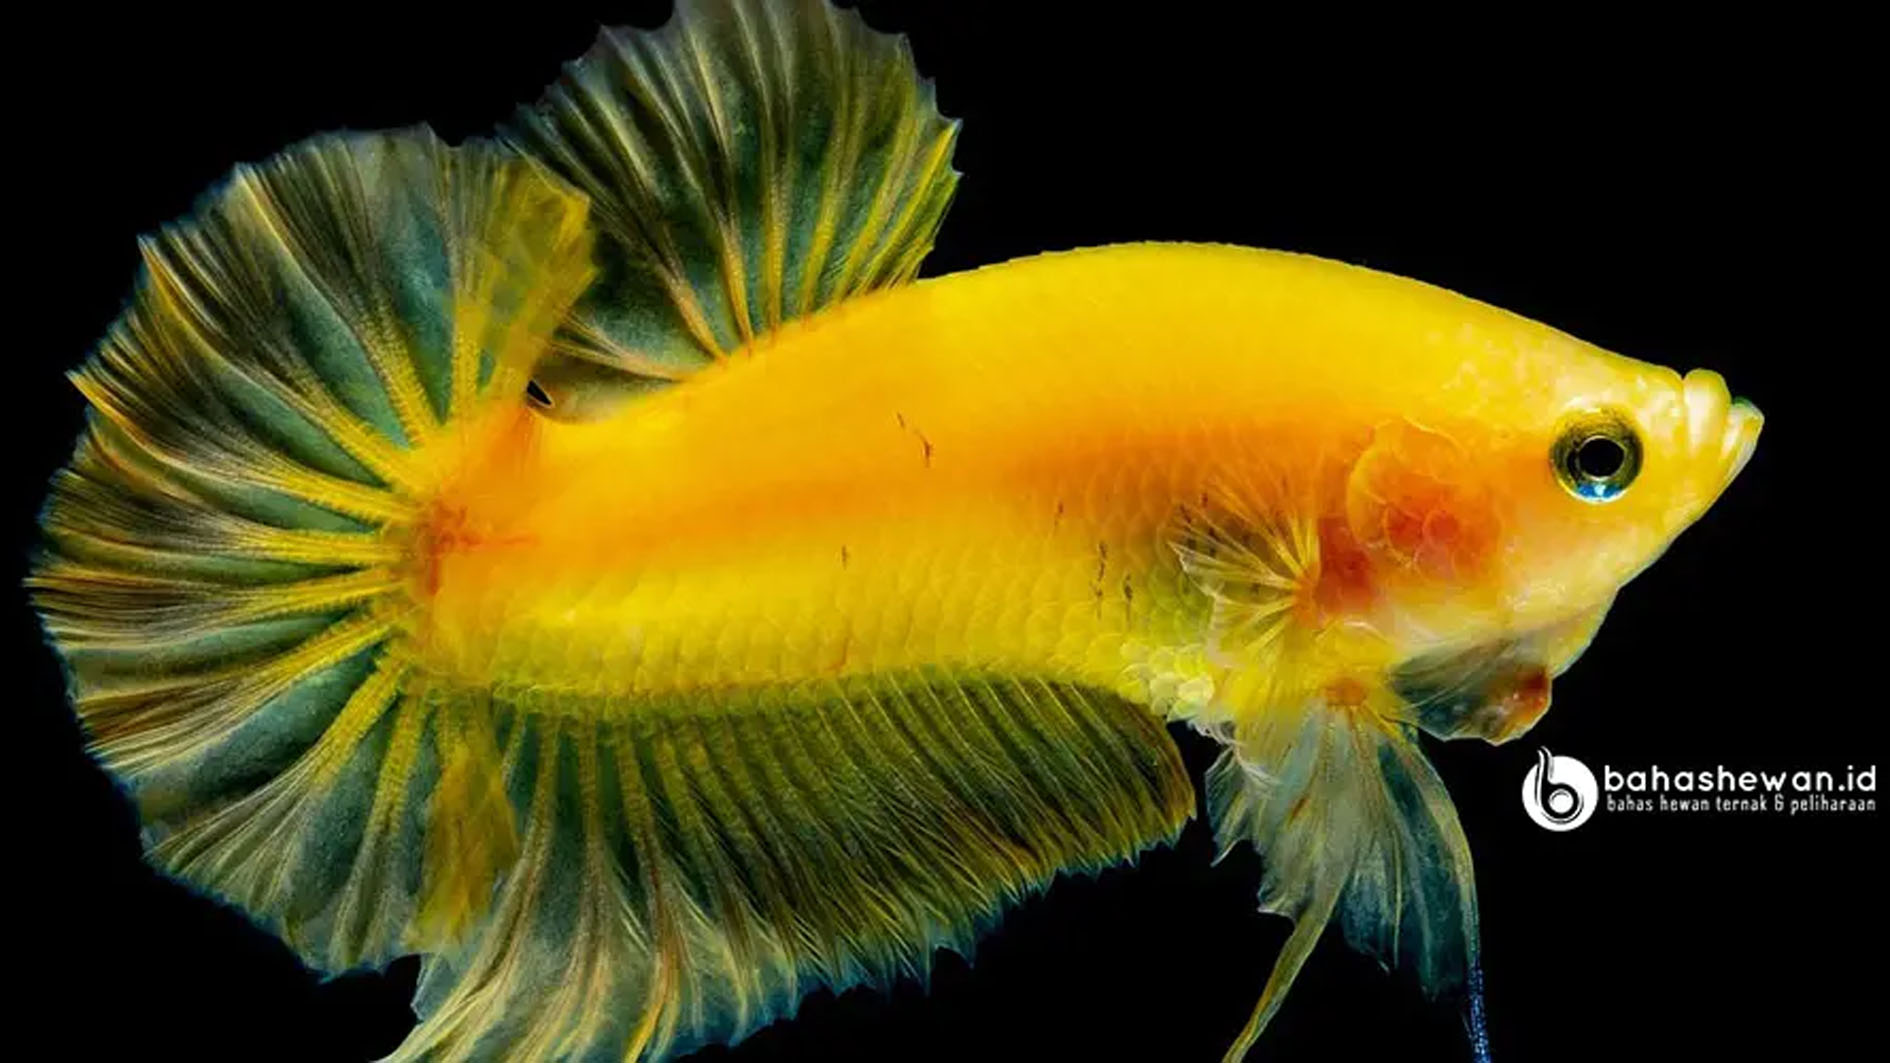 Tubuh Ikan Hias ini Berwarna Emas yang Sangat Memanjakan Mata, Begini Cara Merawatnya